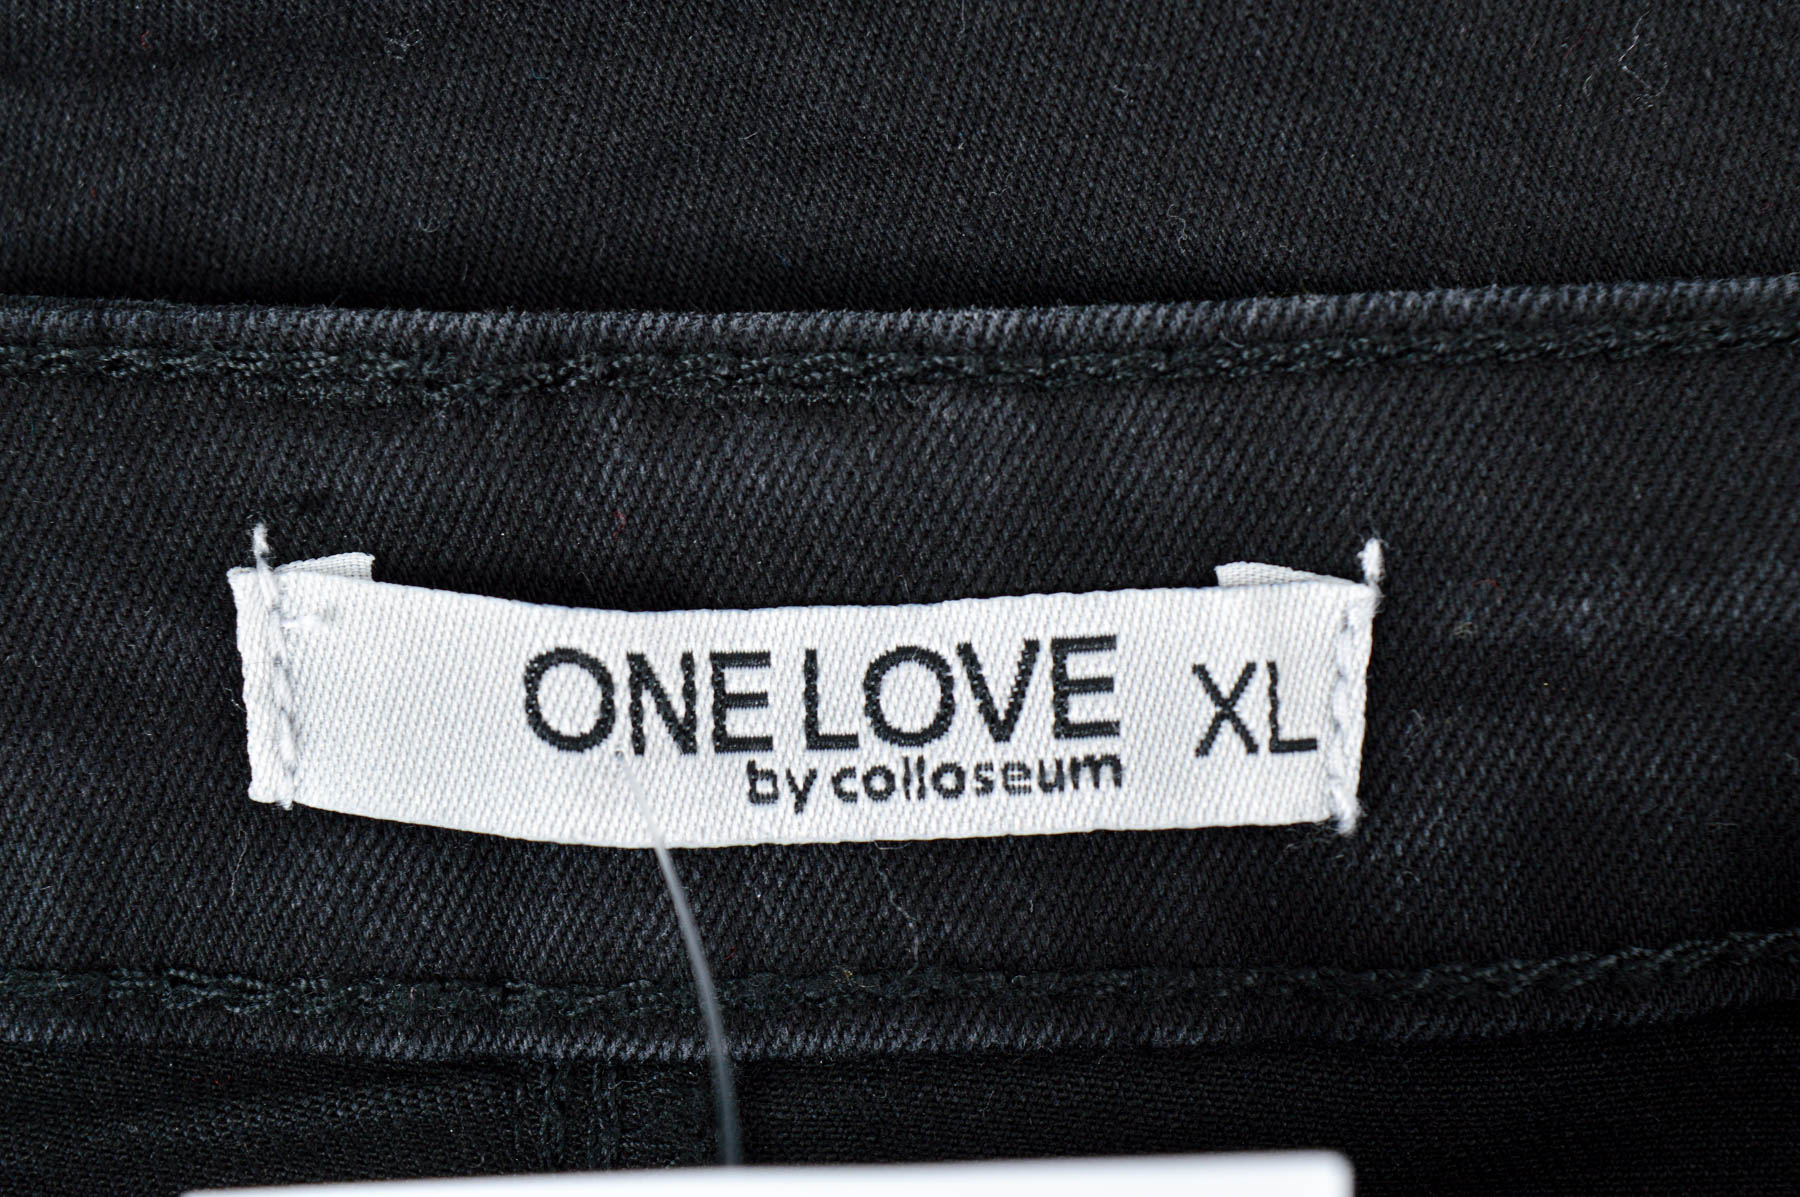 Spódnica jeansowa - ONE LOVE by colloseum - 2